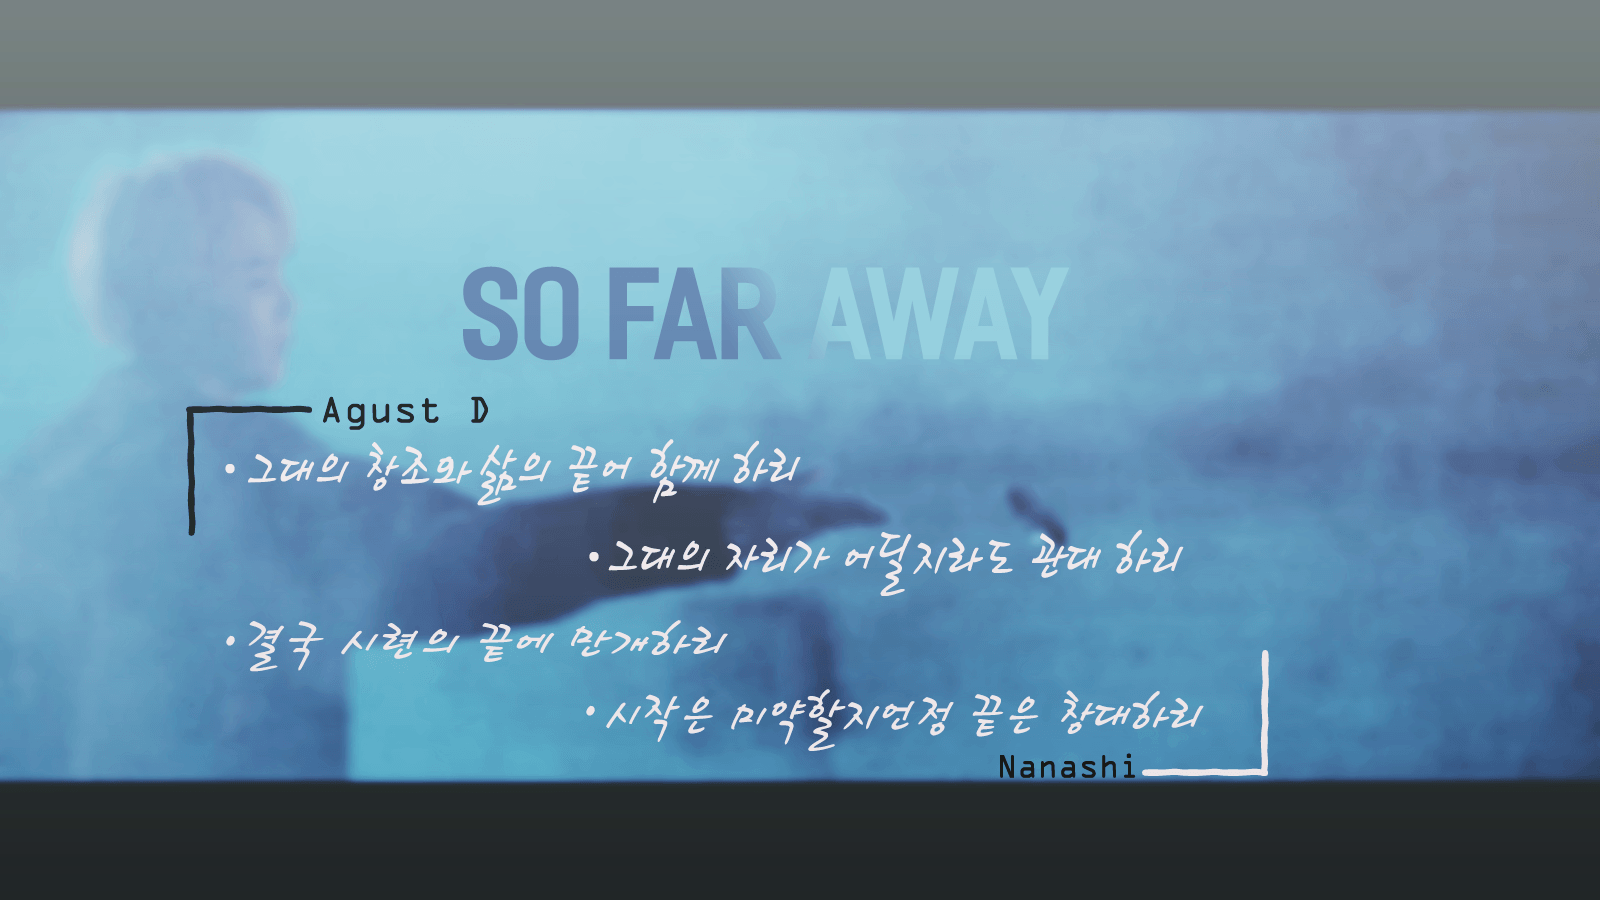 So far away. Track 10 Agust D D BTS Suga 1st